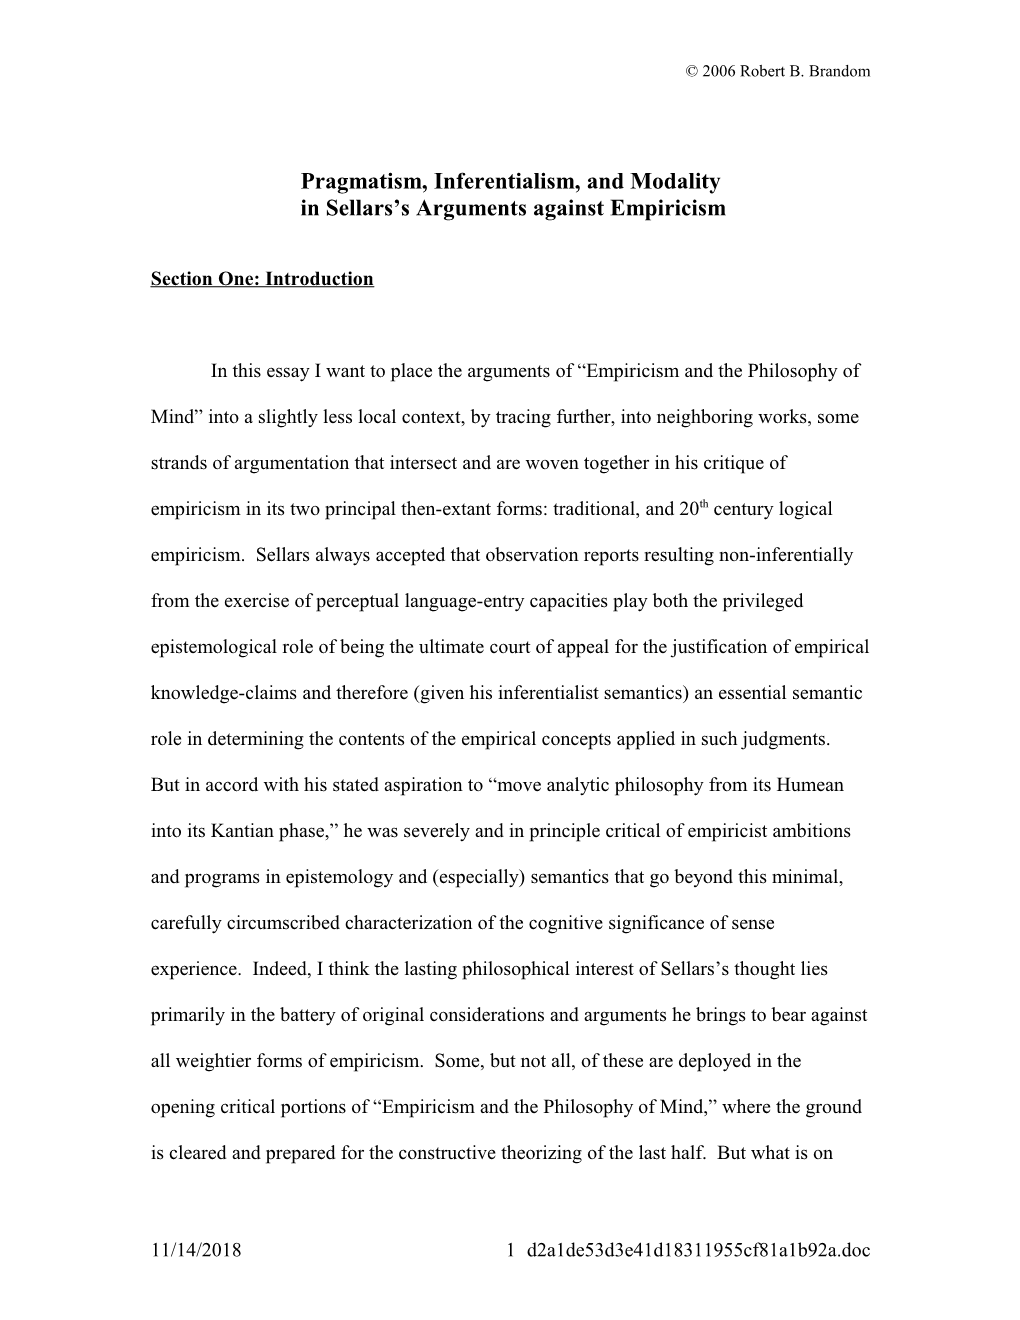 Pragmatism, Inferentialism, and Modality